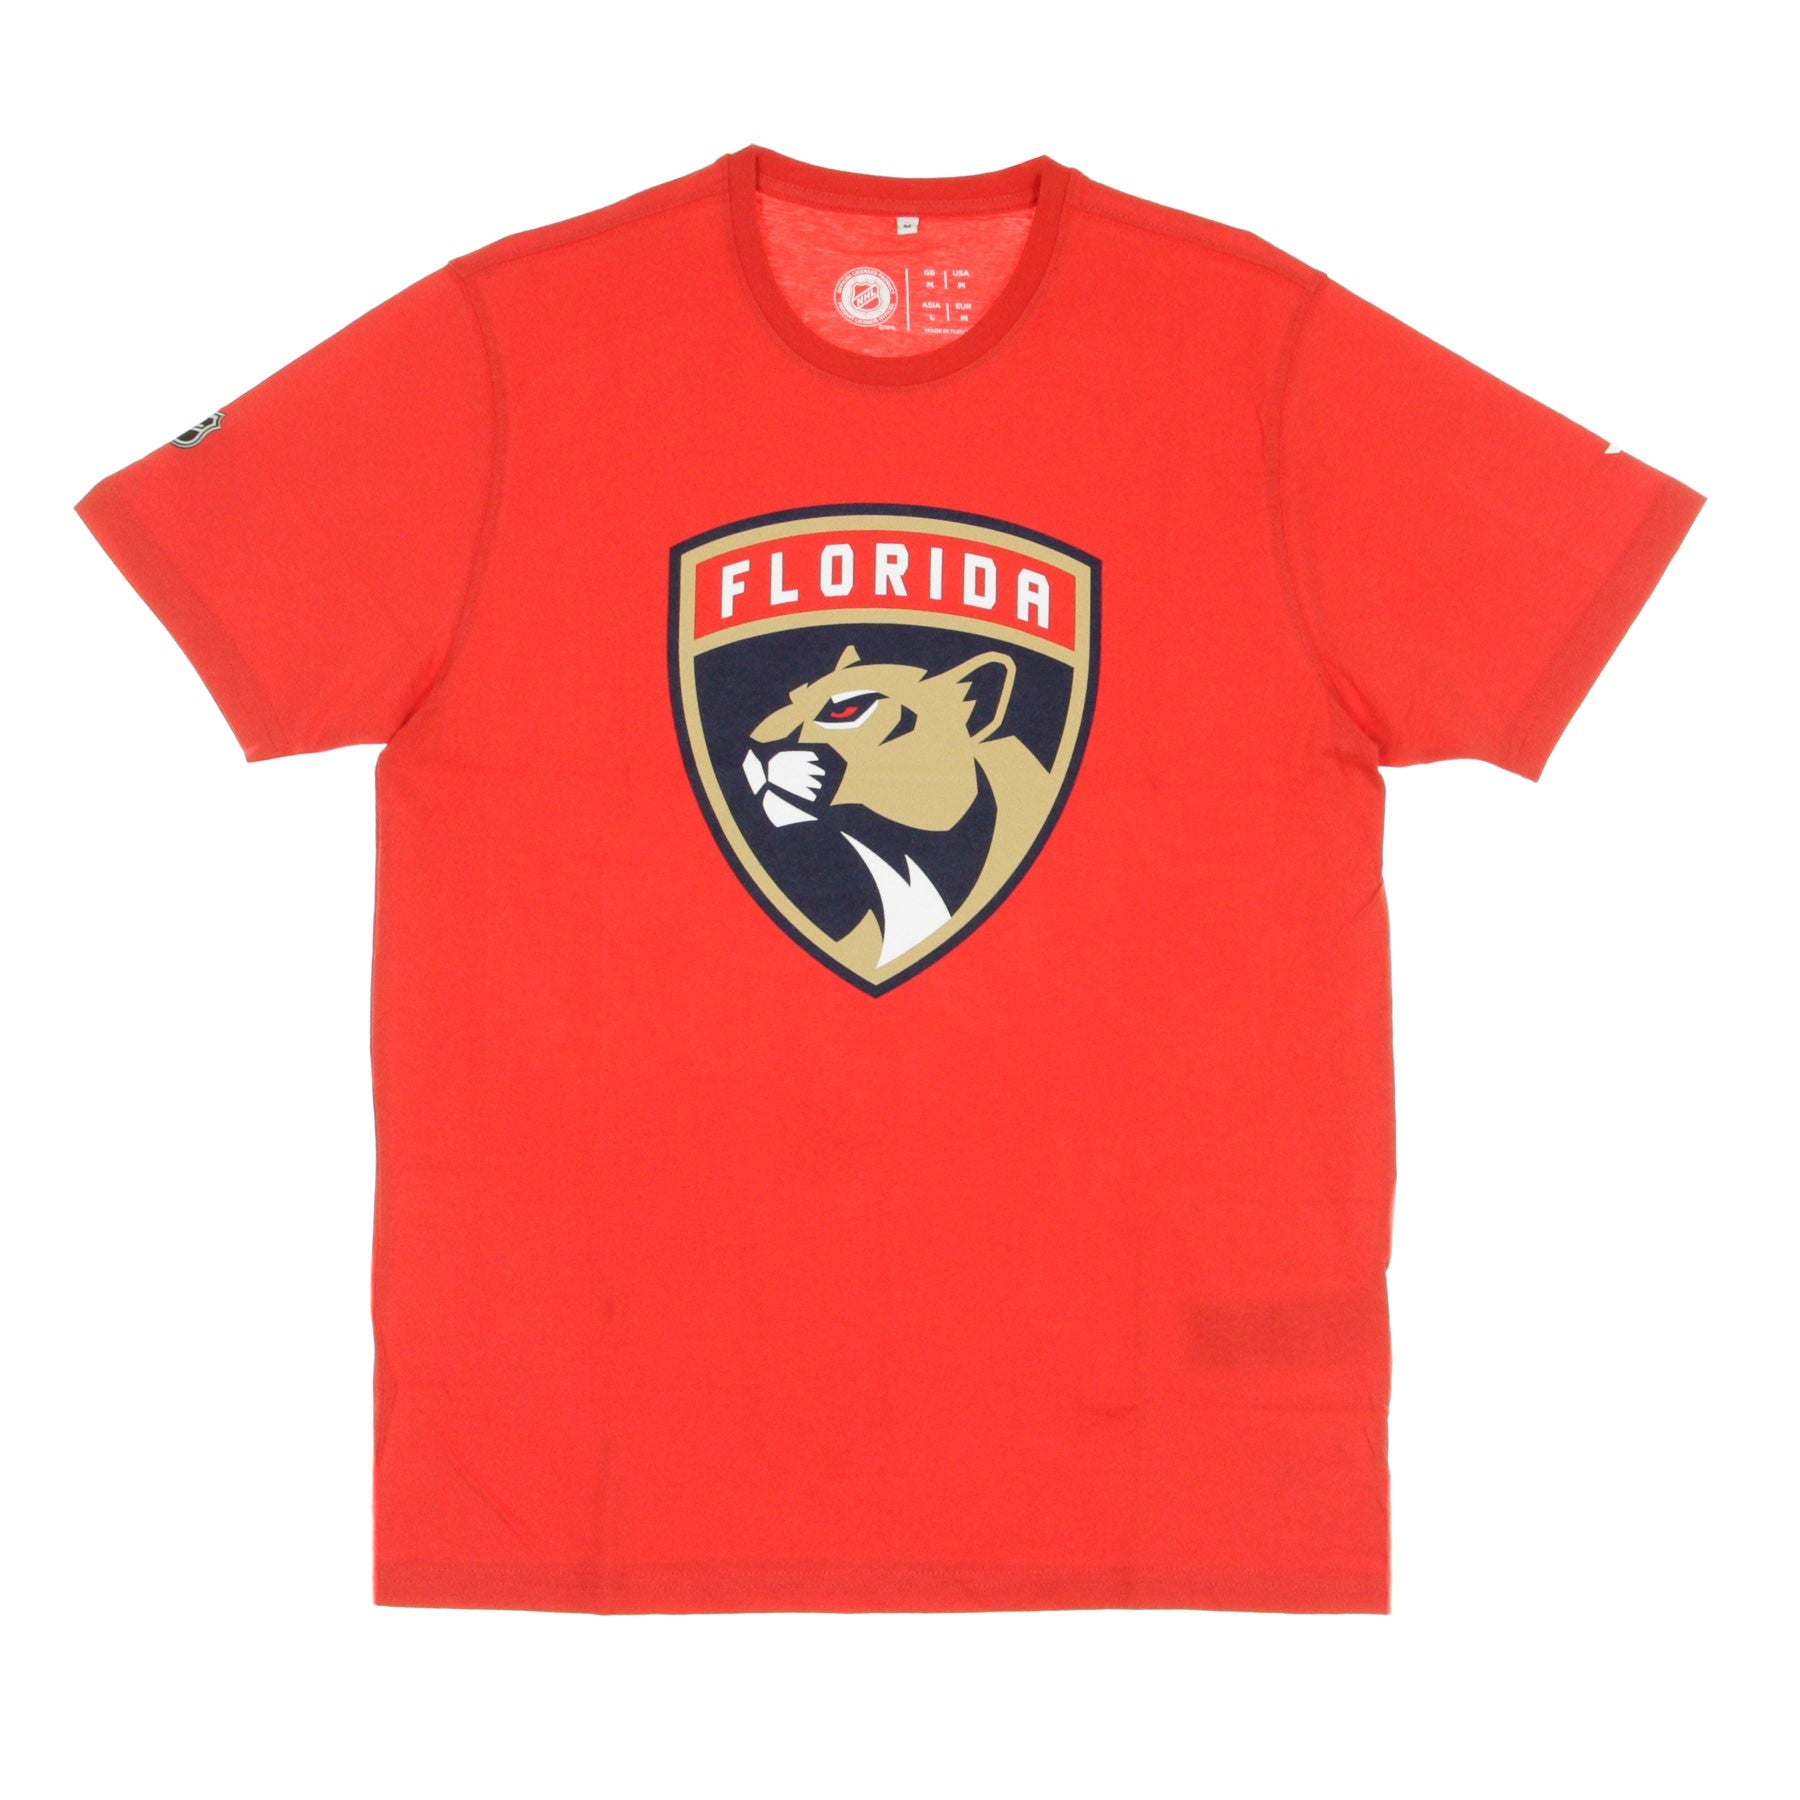 Fanatics Branded, Maglietta Uomo Nhl Iconic Primary Colour Logo Graphic T-shirt Flopan, Original Team Colors